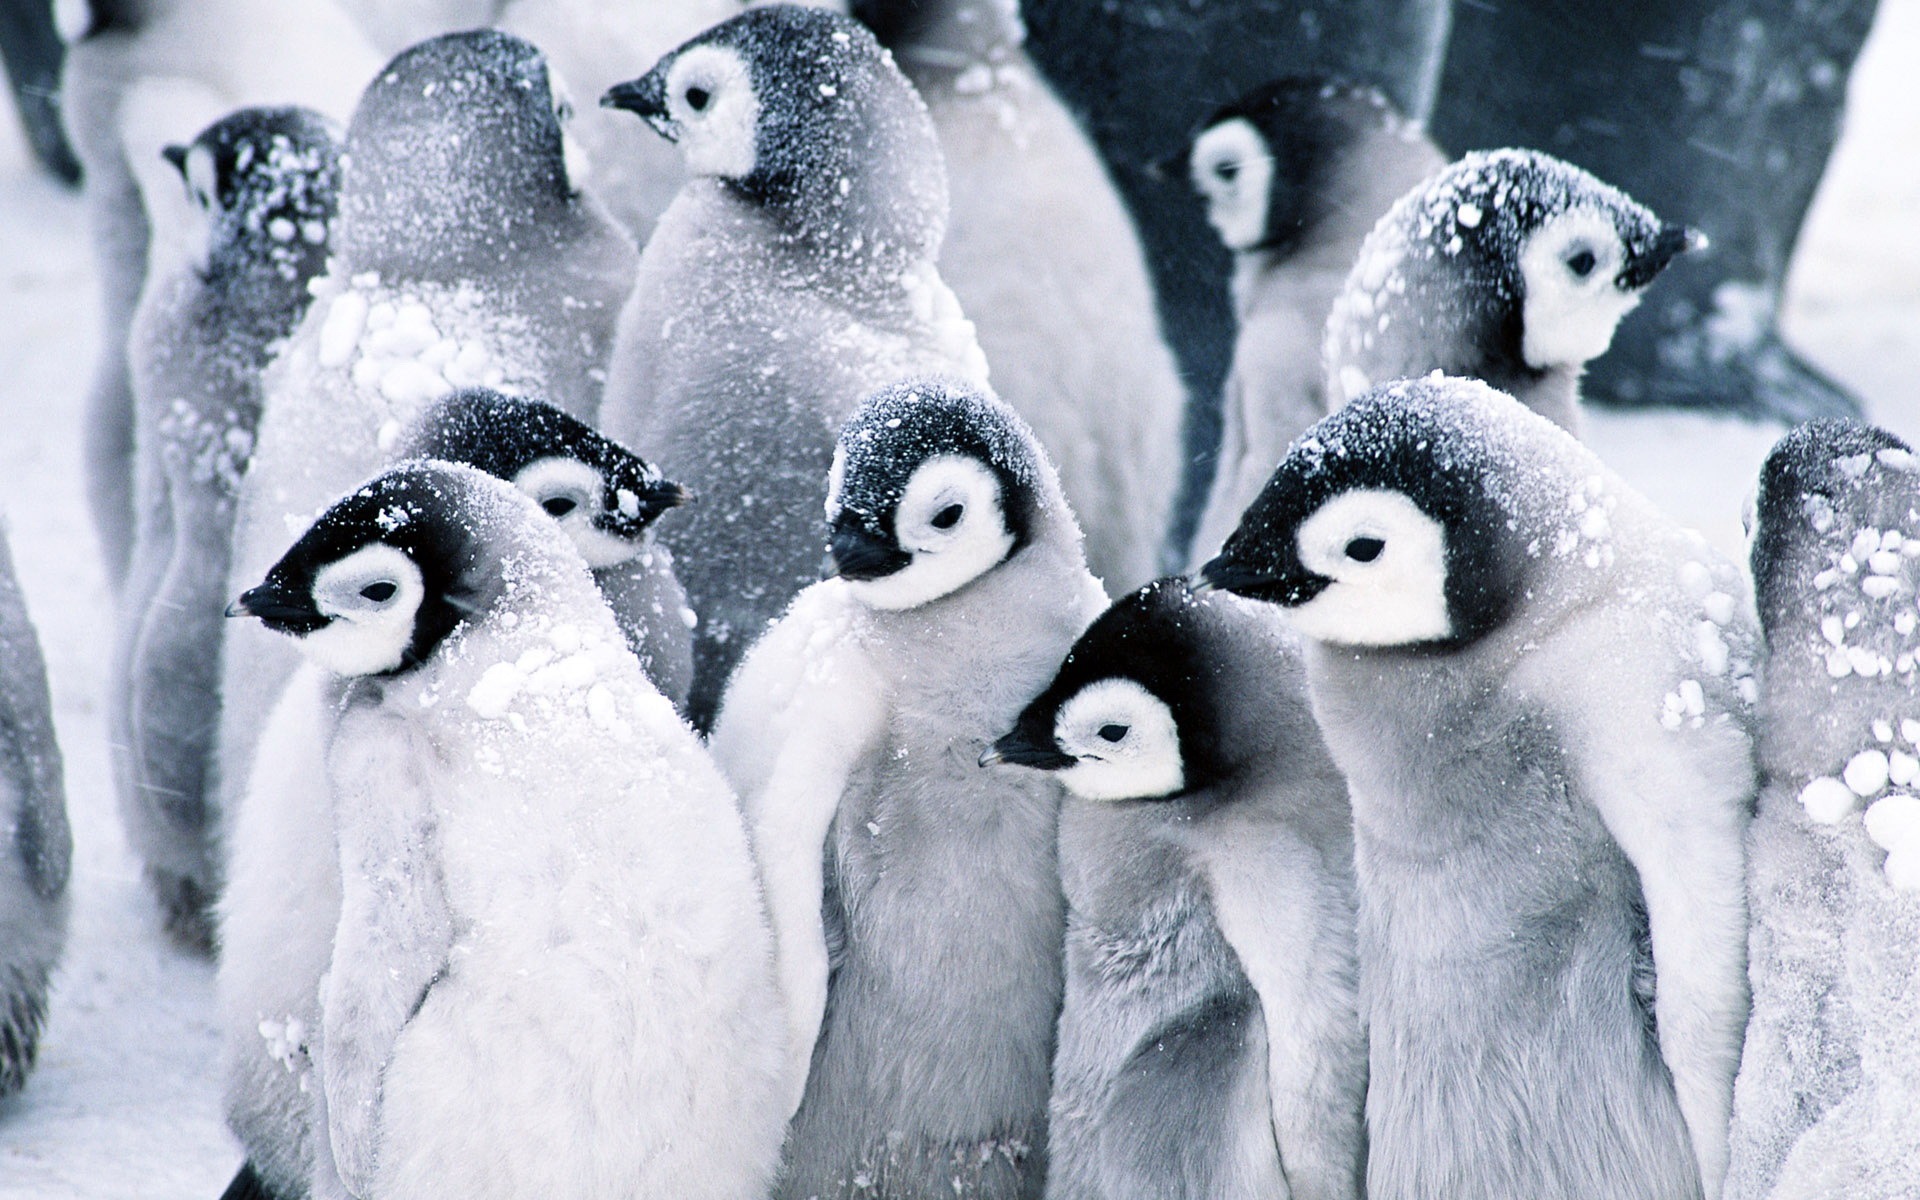 Baby Penguins Wallpaper Animals In Jpg Format For